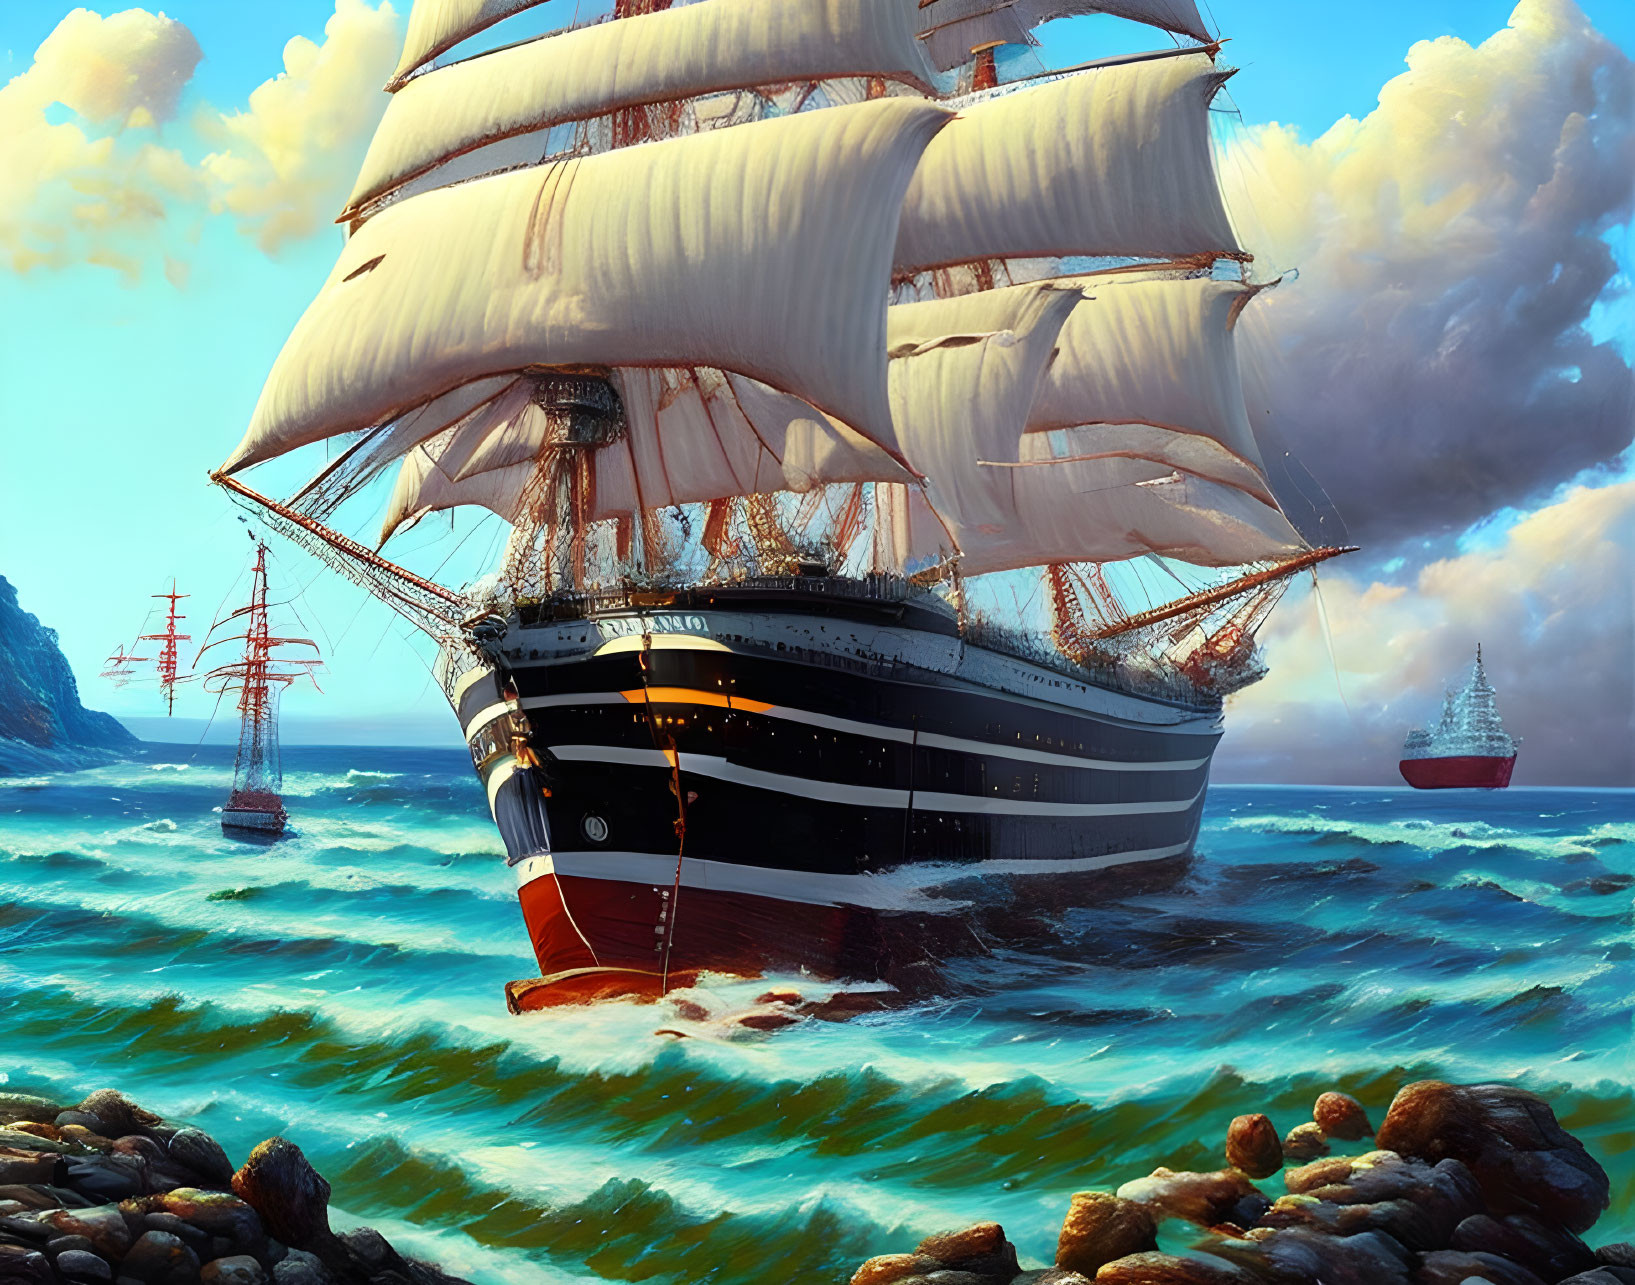 Sailor Ship in the Atlantic ocean